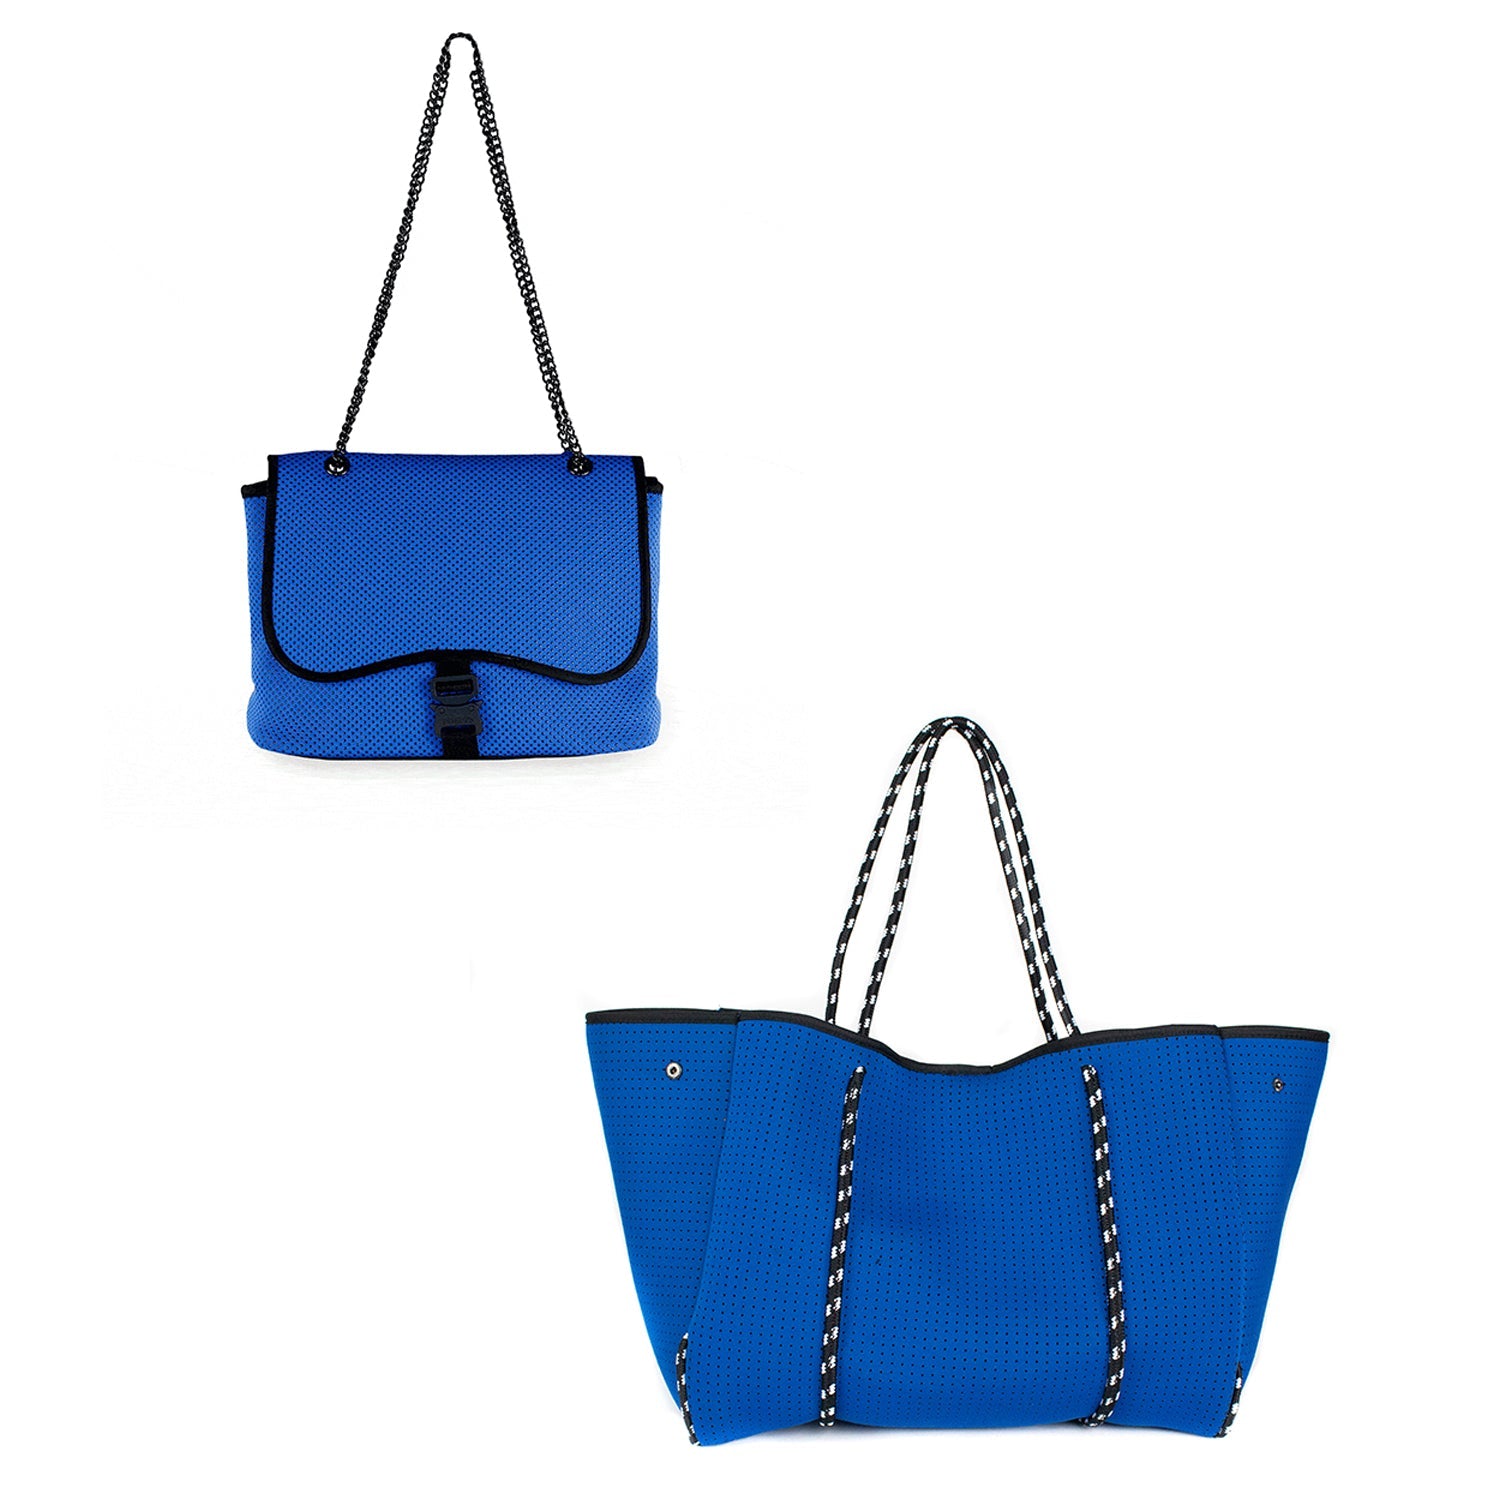 POPUPS Neoprene Large Tote Bags - Lightweight and Water-Resistant Neoprene Bag